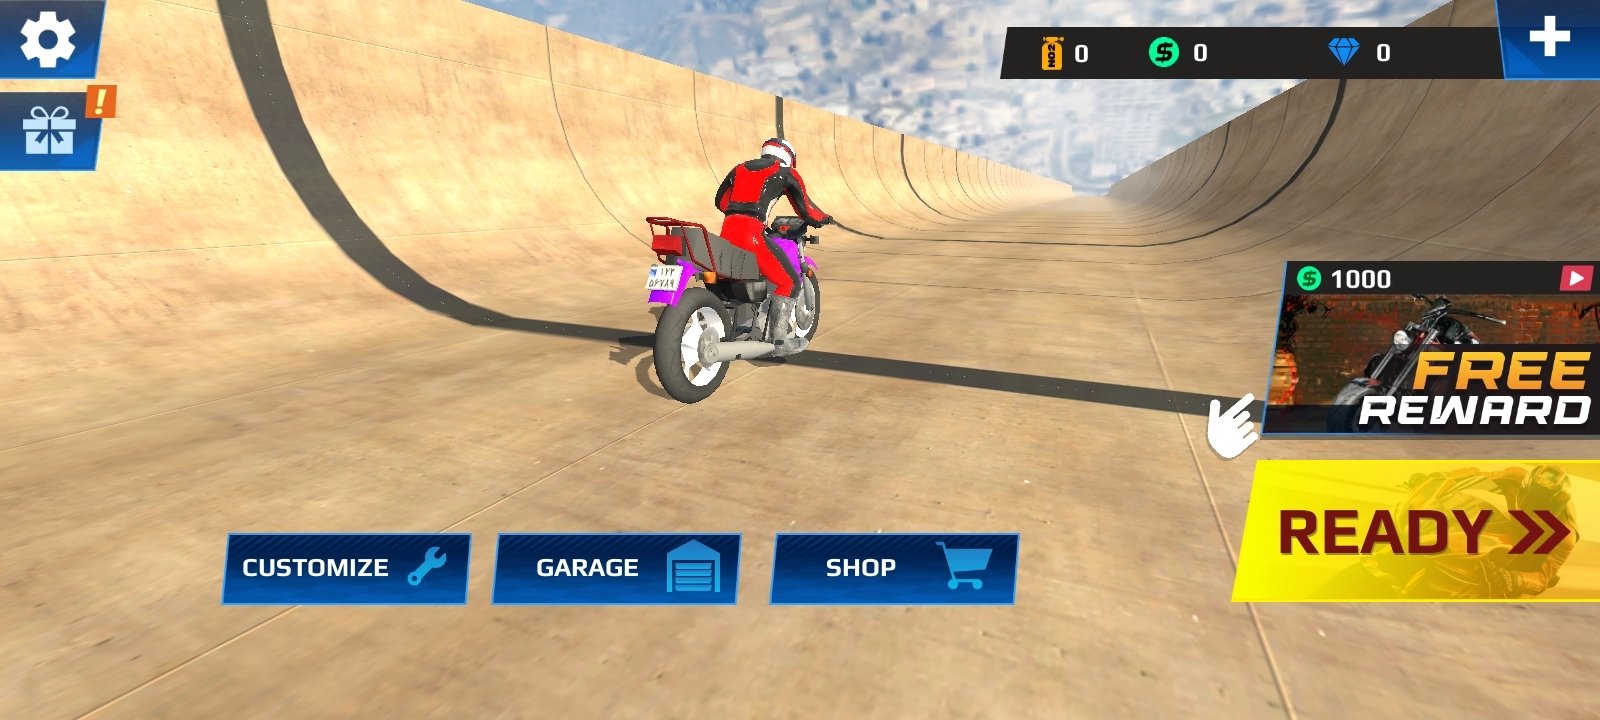 Download do APK de Jogo de moto de corrida 3d para Android